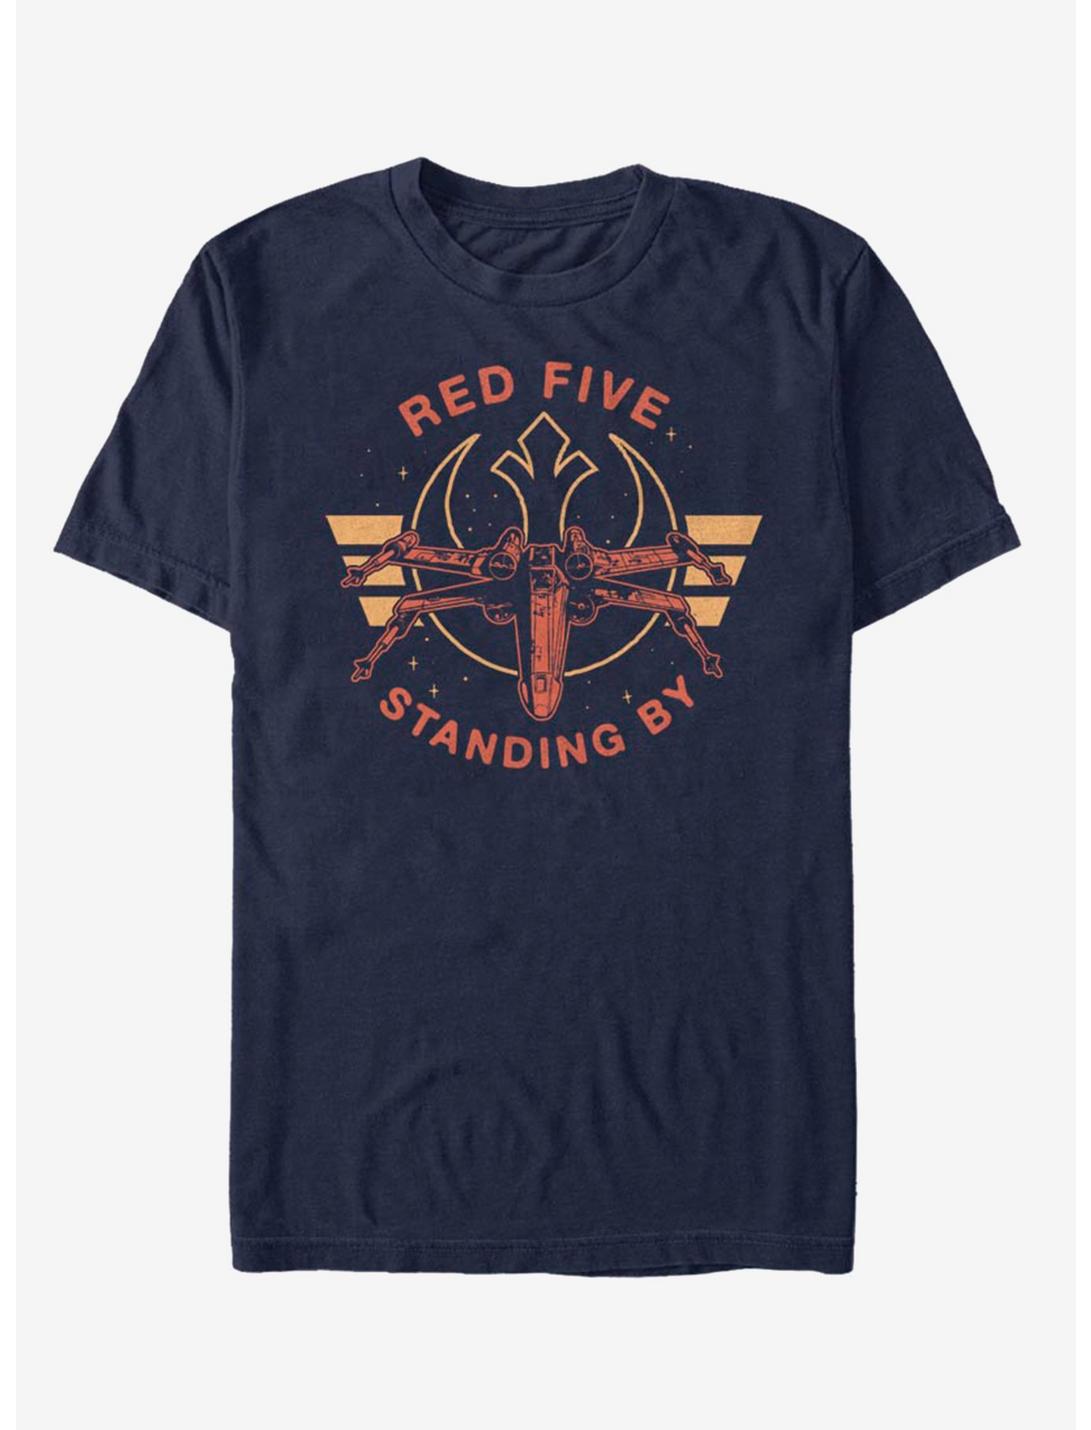 Star Wars Red Five T-Shirt, NAVY, hi-res